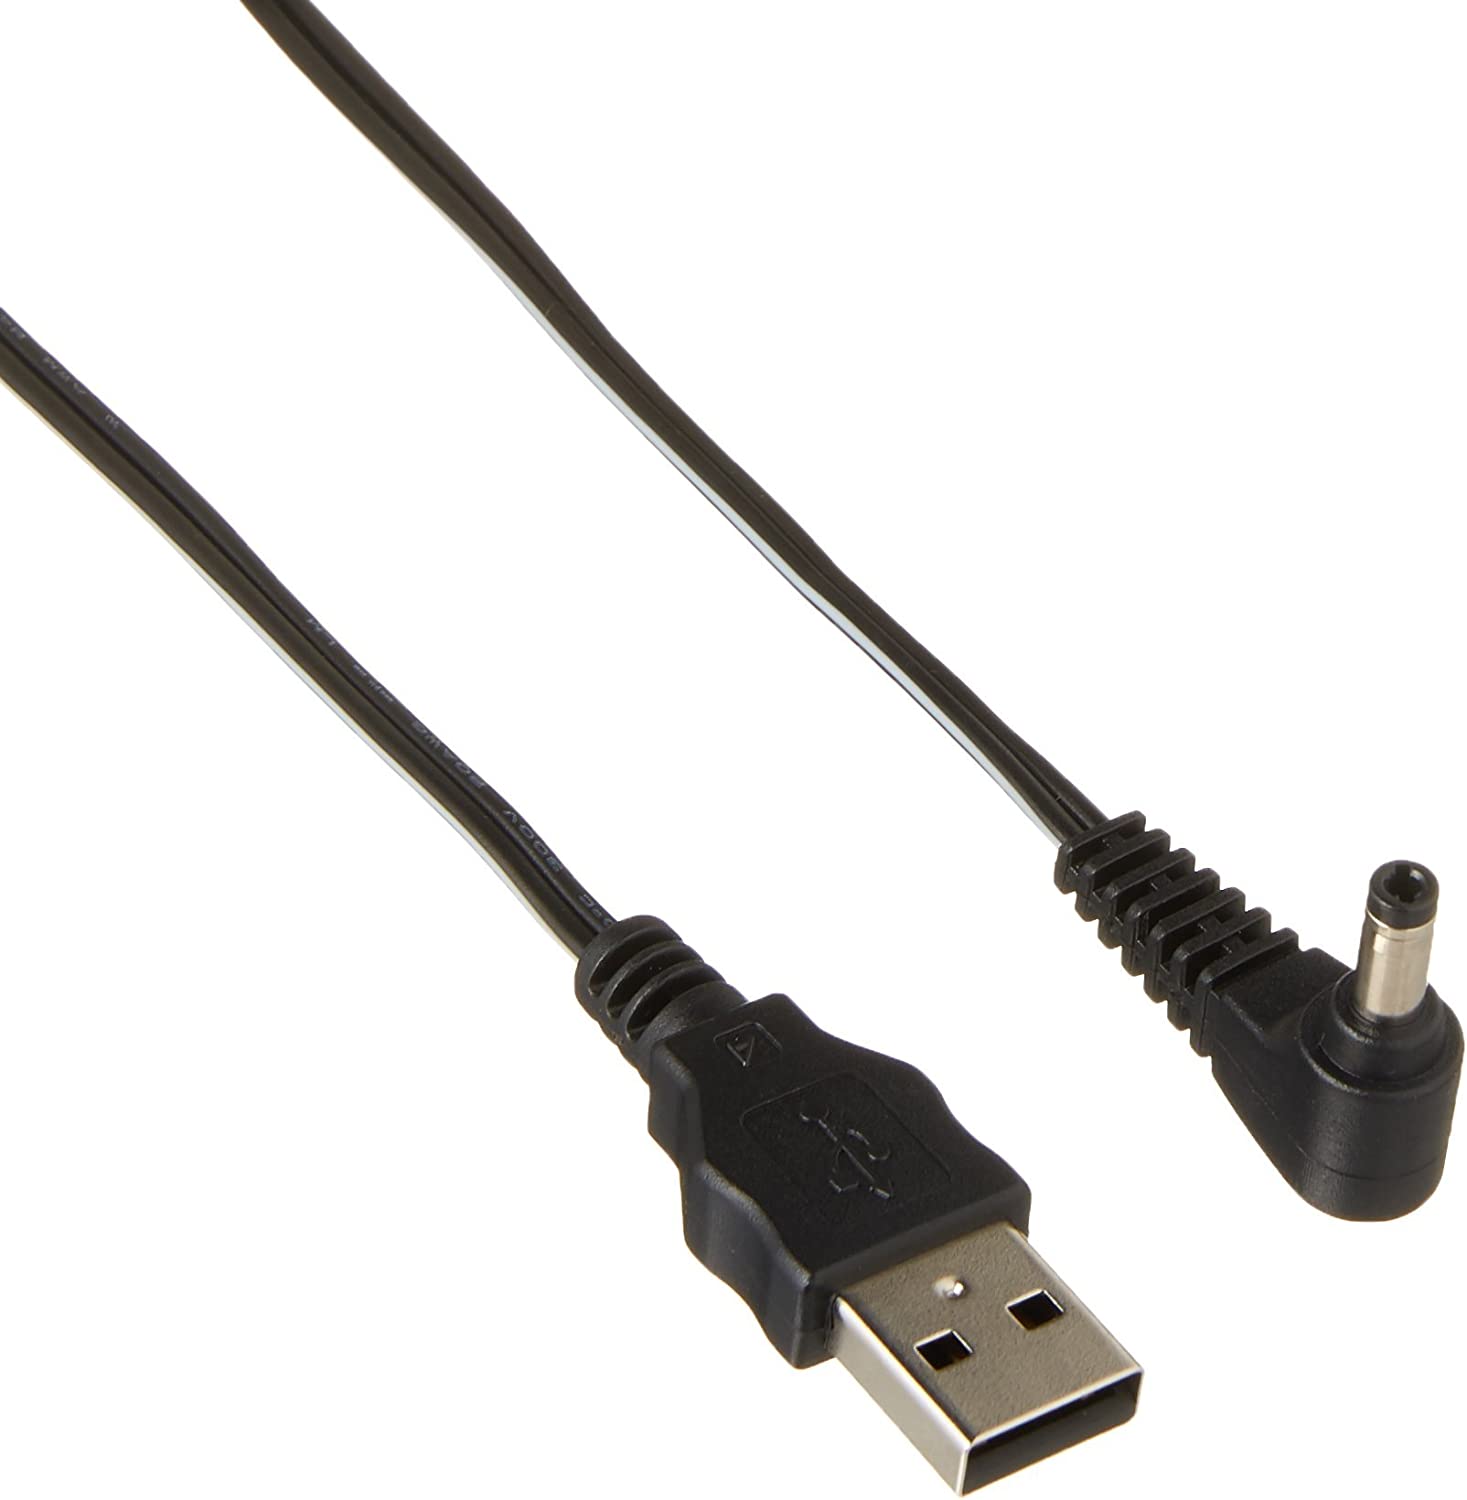 Panasonic USB Power DC Charger Cable for Panasonic Camcorder